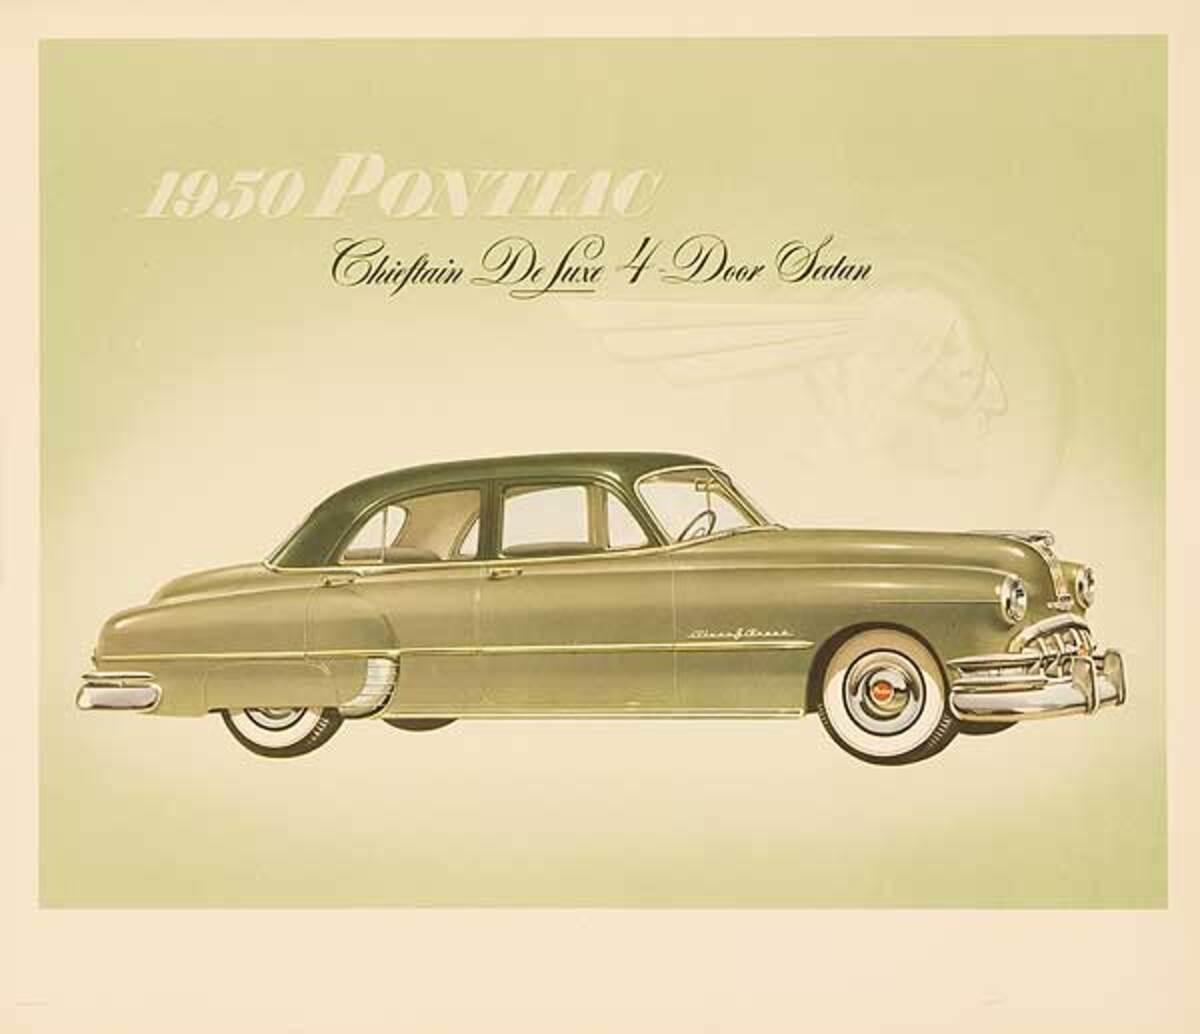 1950 Pontiac Chieftan Deluxw 4 Door Sedan Original Showroom Advertising Poster